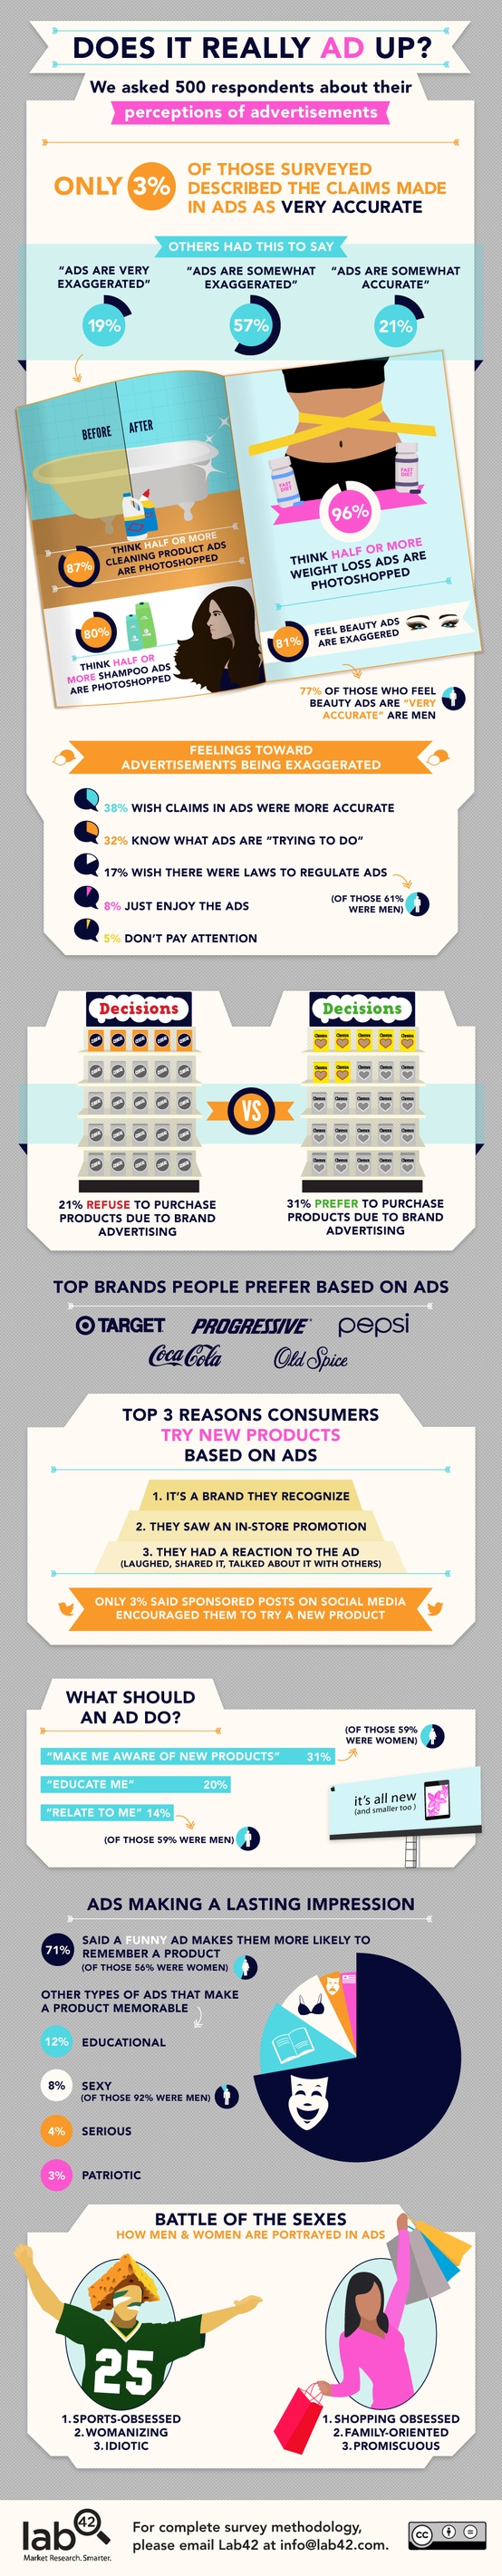 Advertisements_perceptions